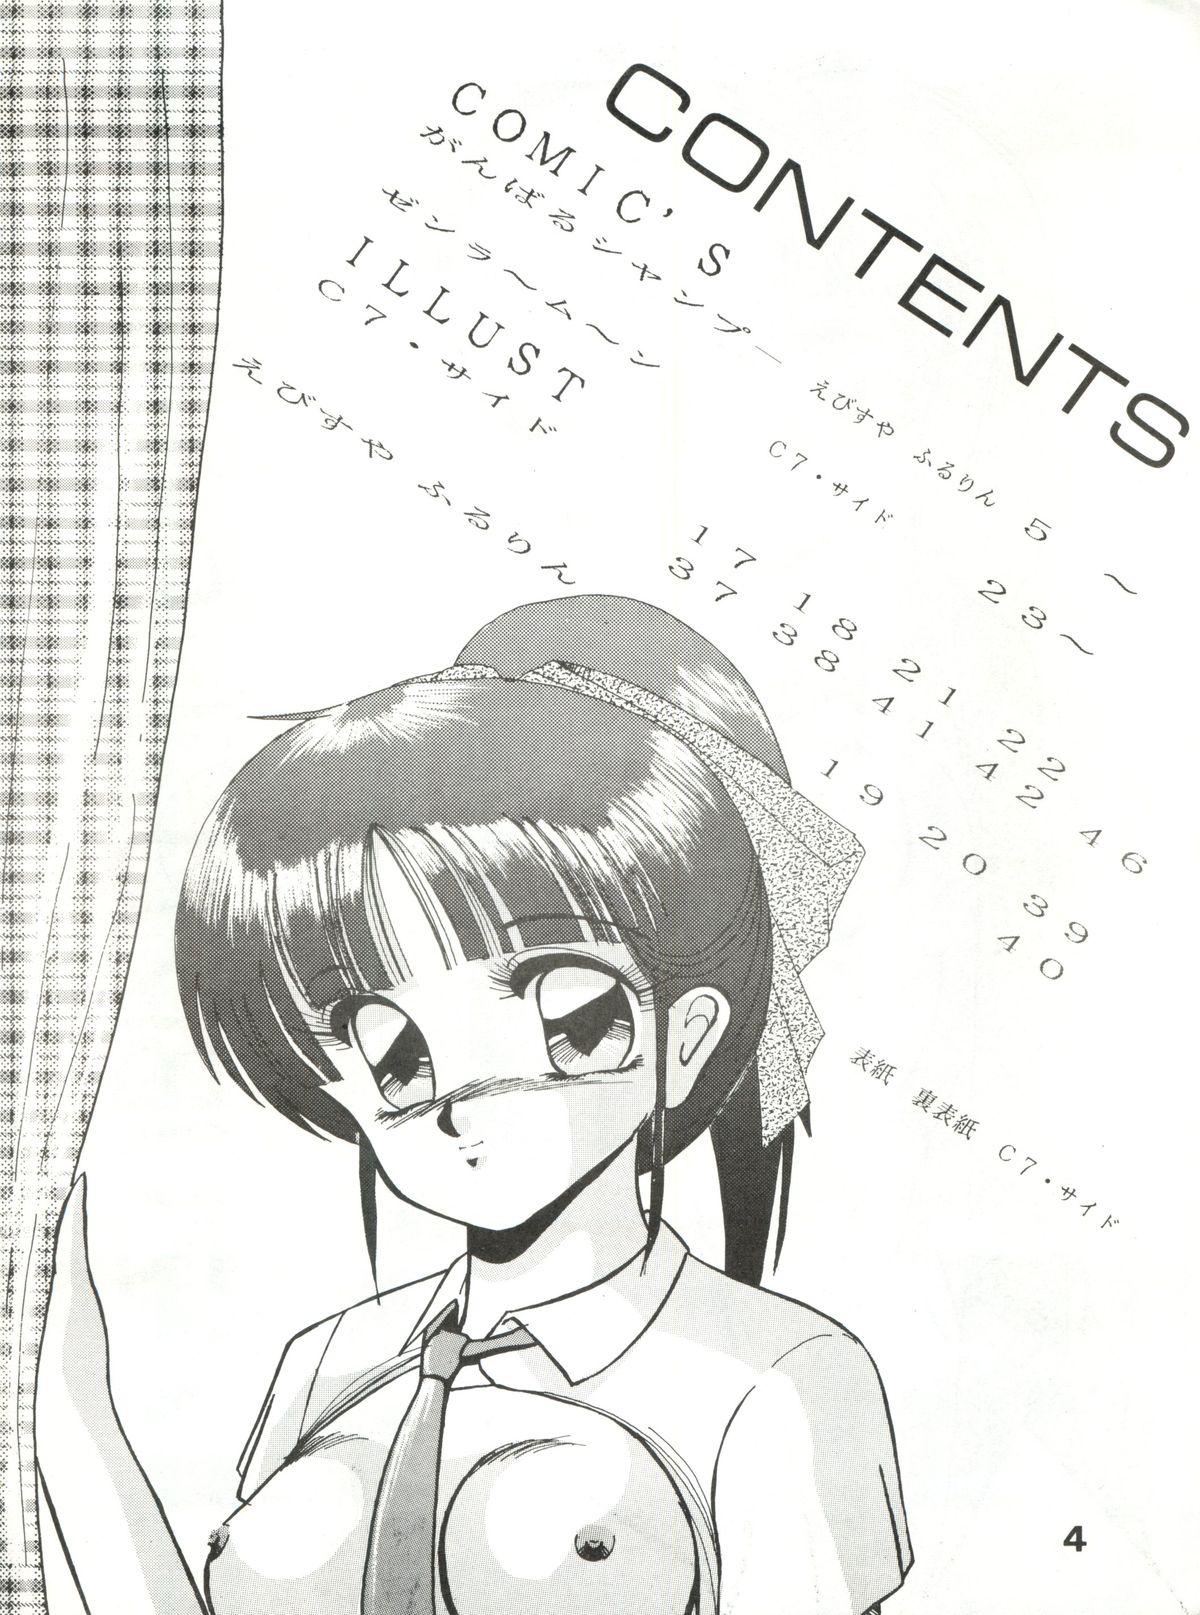 Seduction Zubizu Bat - Sailor moon Ranma 12 3x3 eyes Spy Cam - Page 4